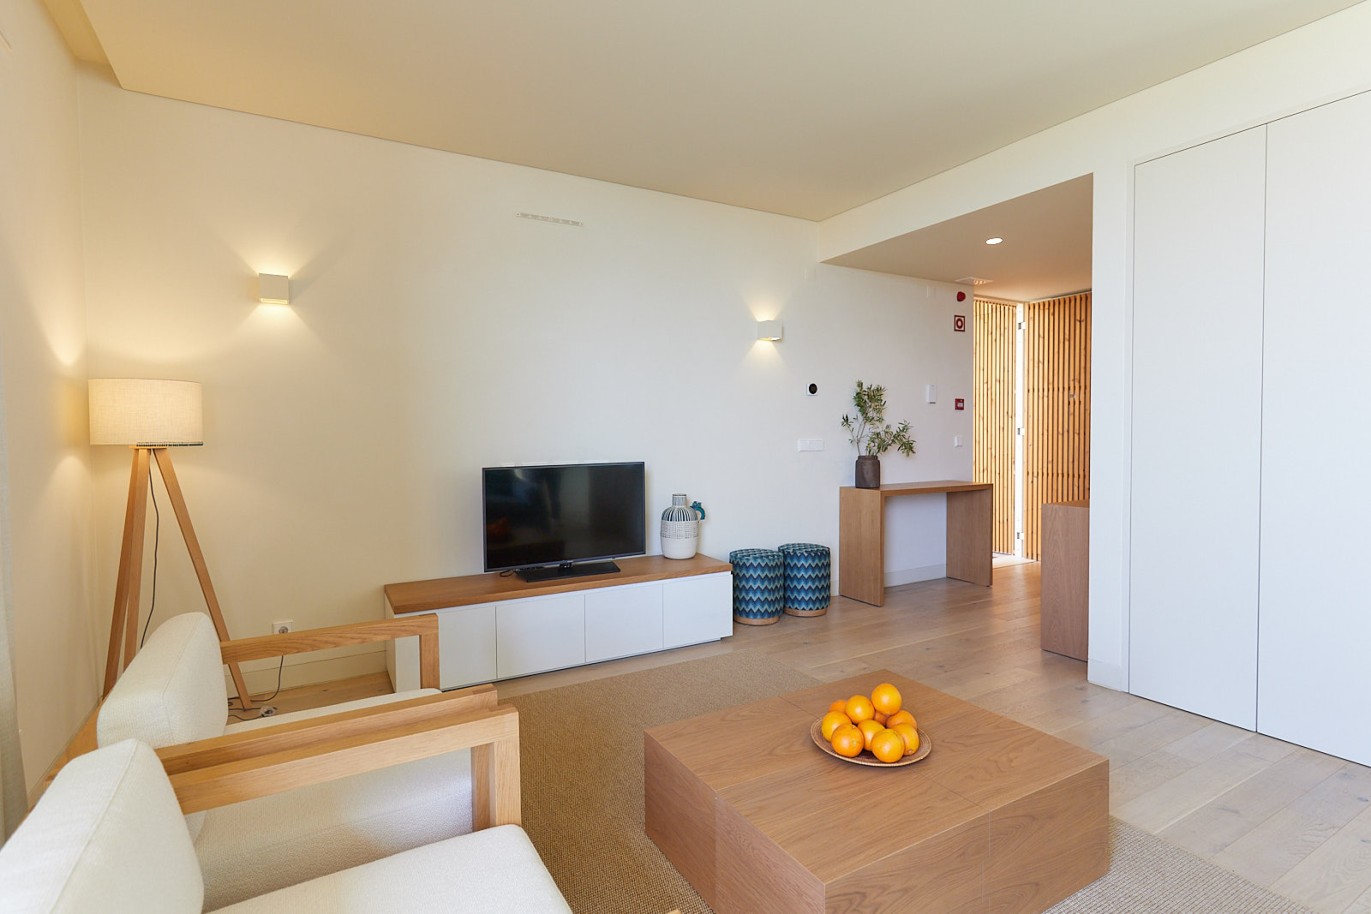 2 bedroom apartment in resort, for sale in Porches, Algarve_229176